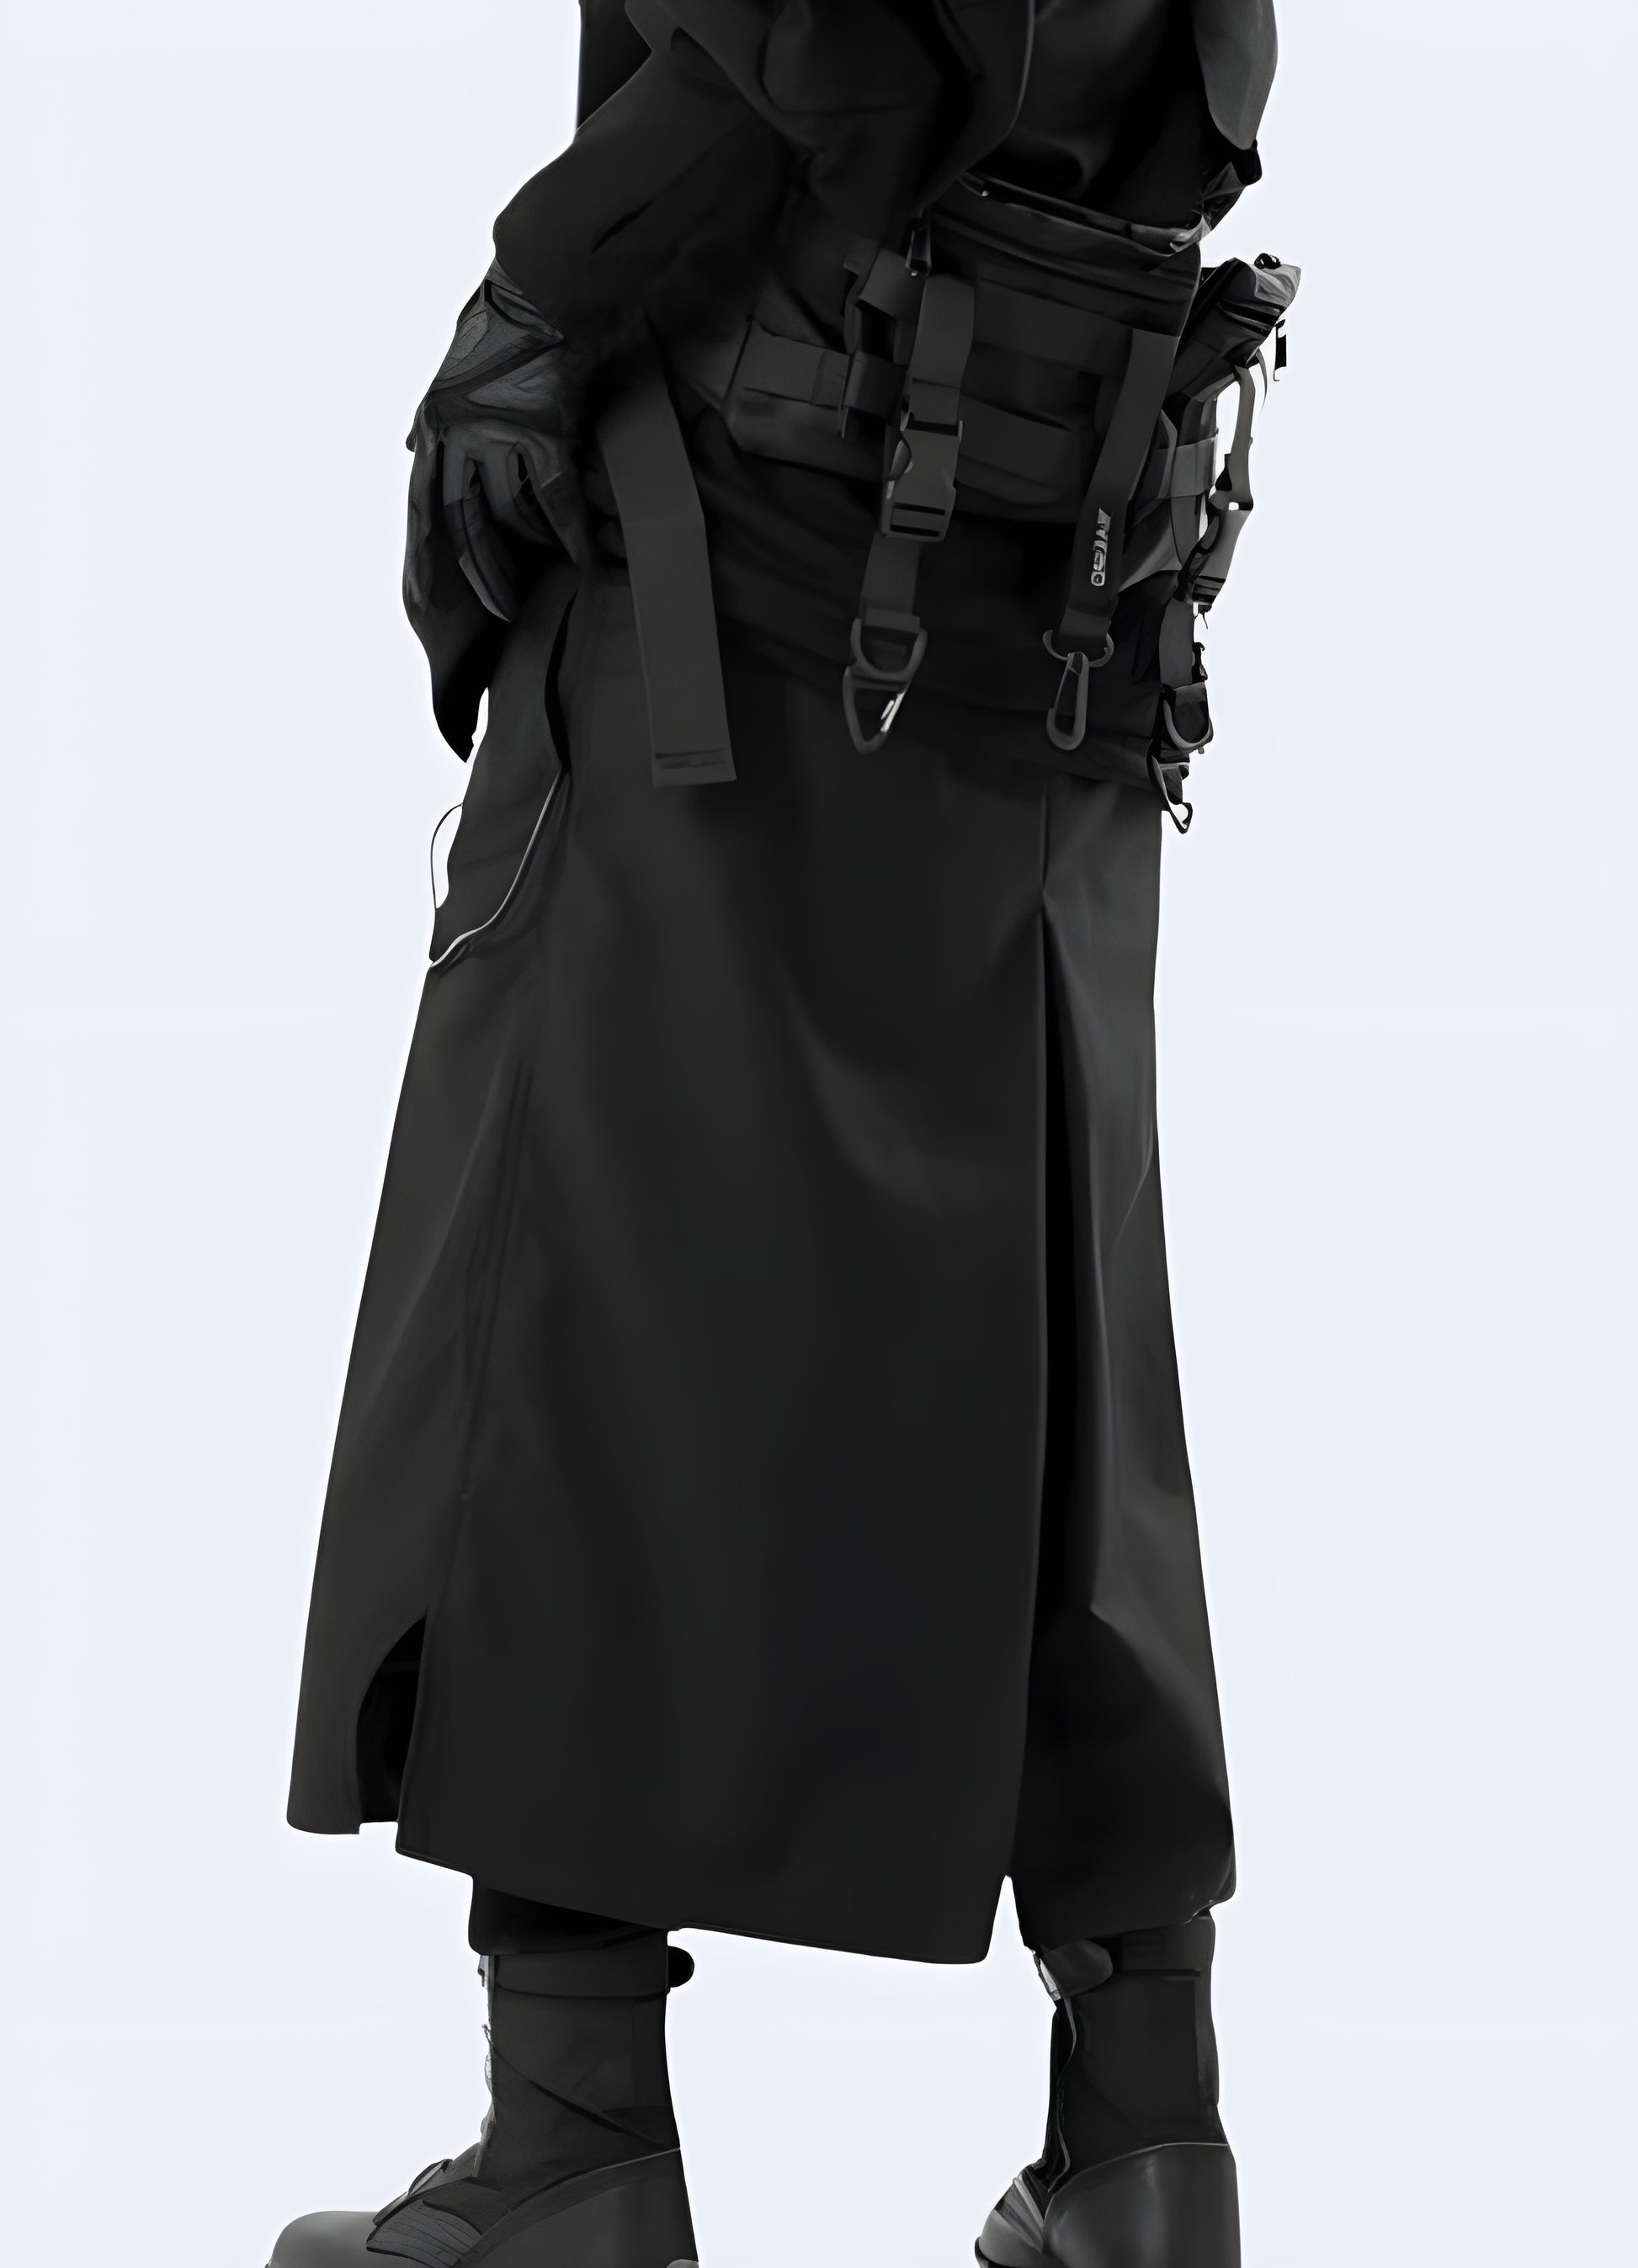 Reinforced seams, comfortable to wear black ninja pants.